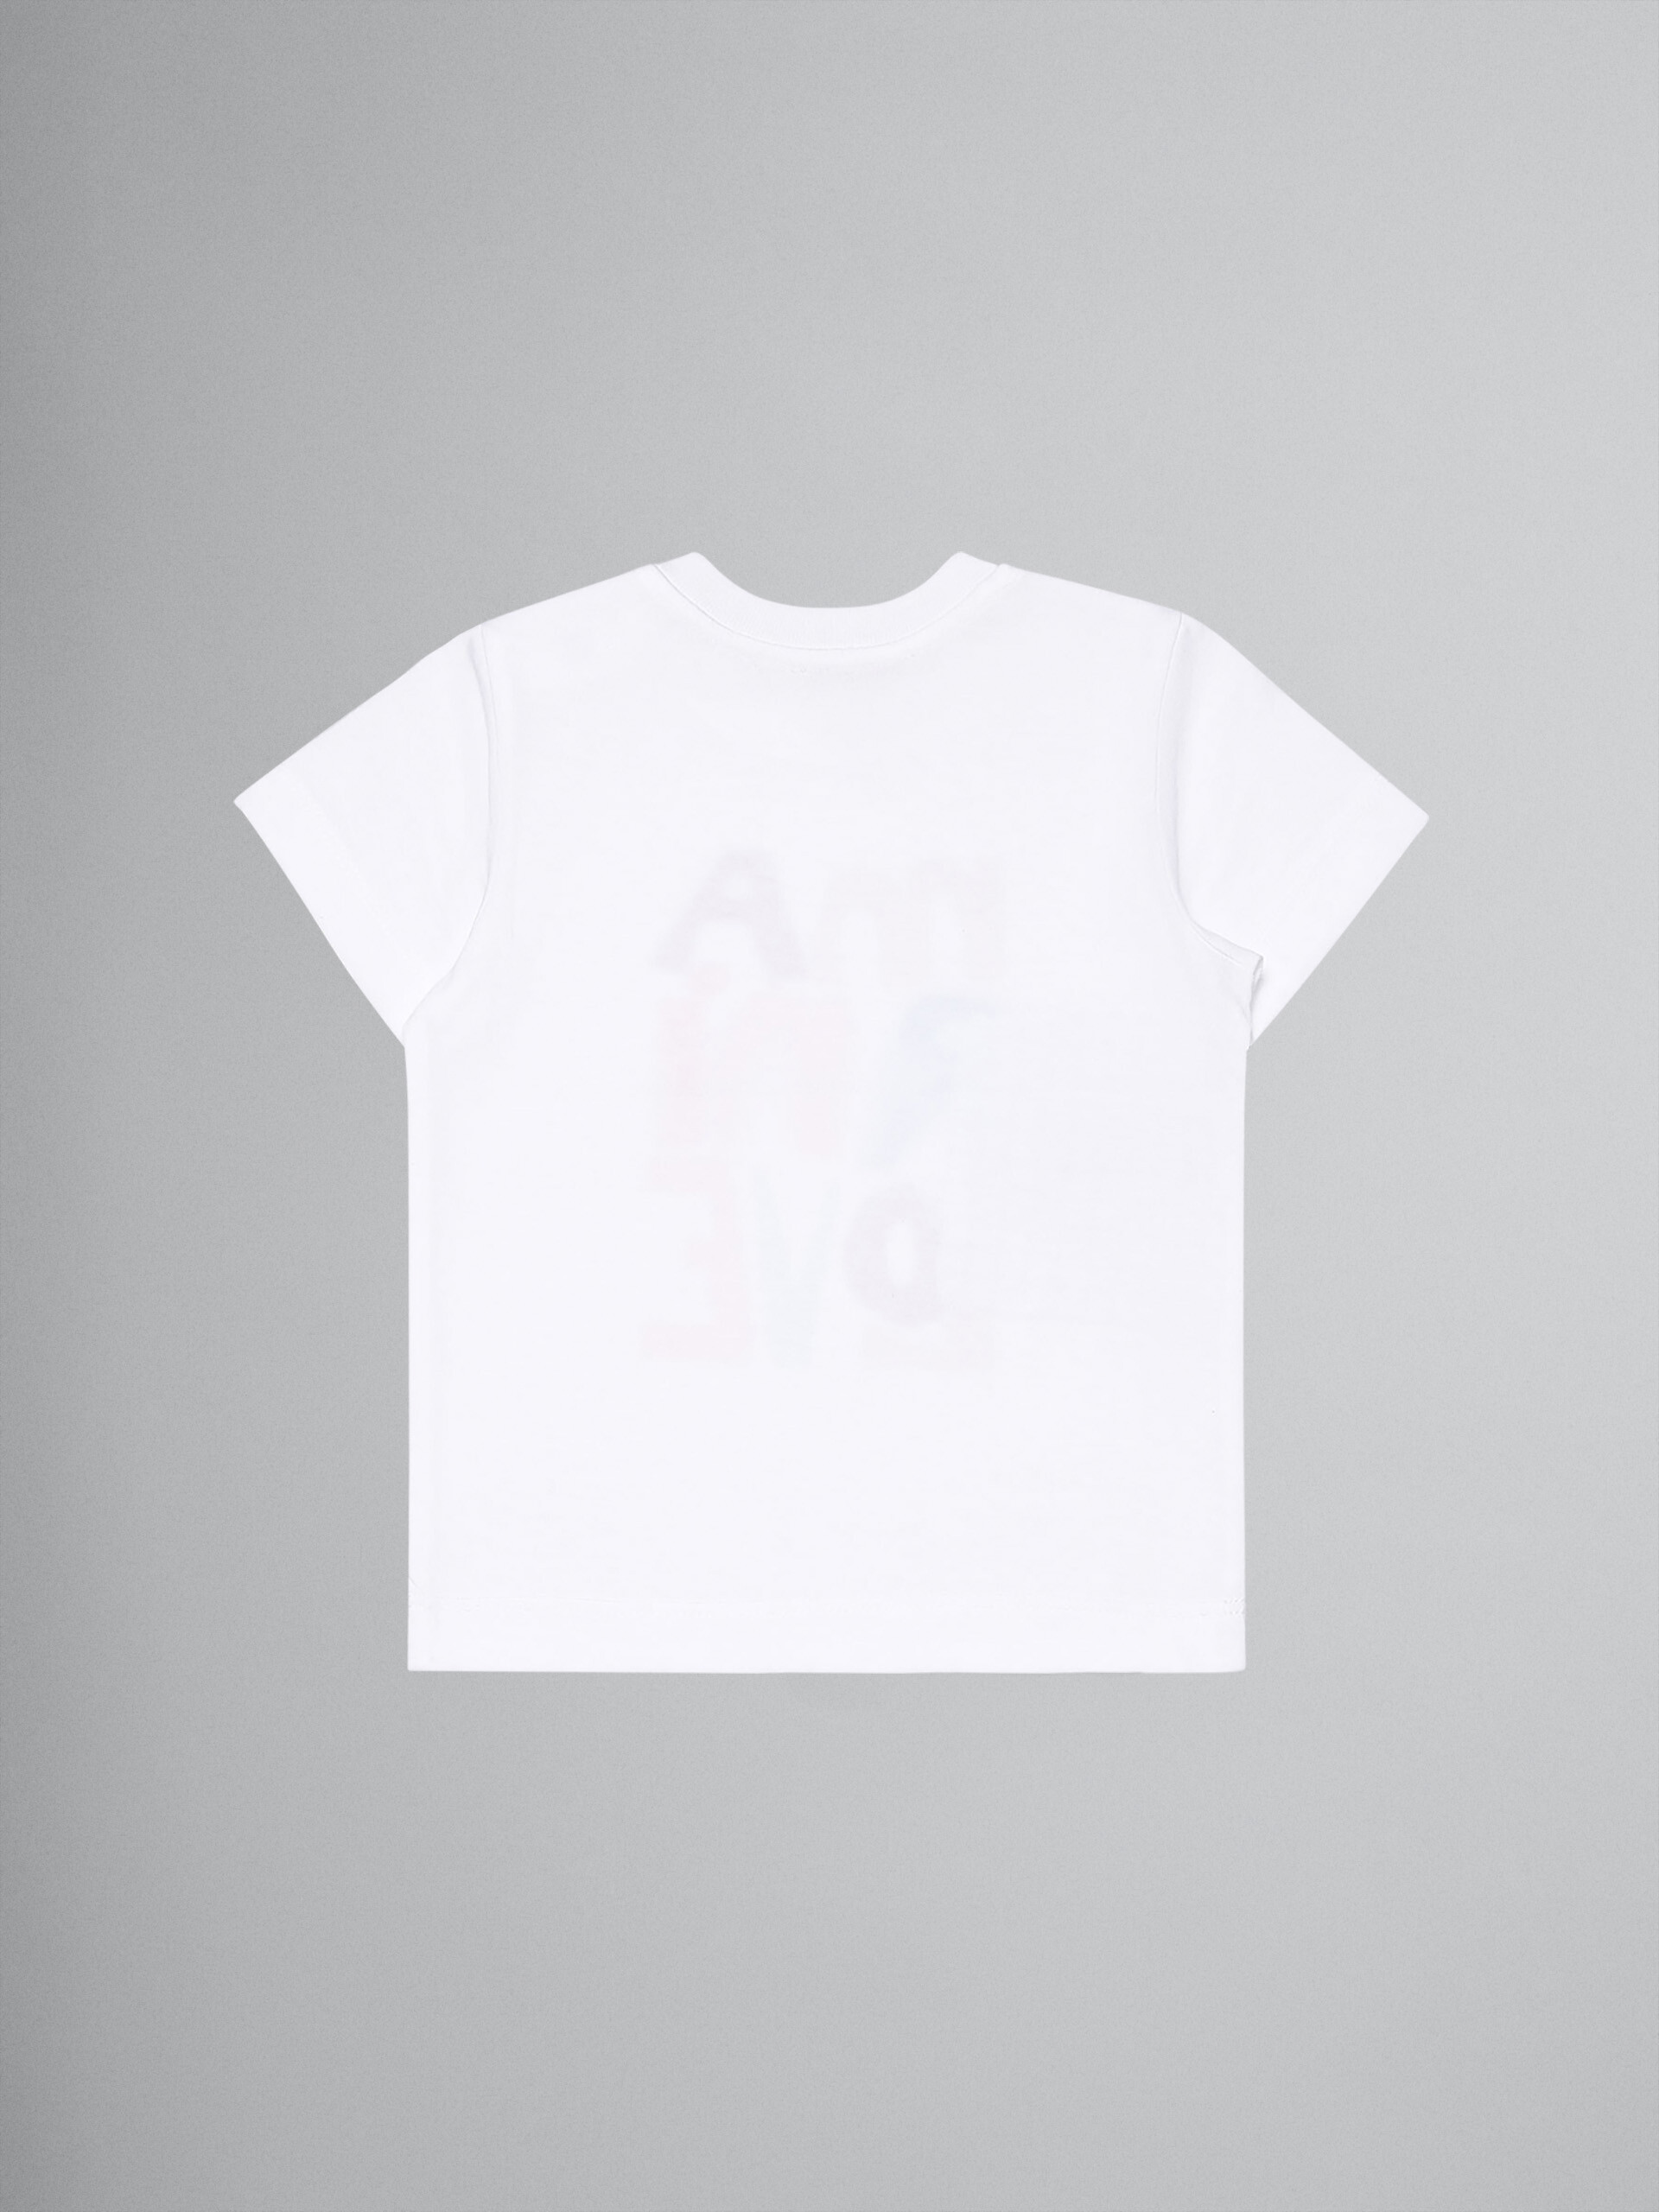 Weißes T-Shirt aus Baumwolljersey mit buntem Schriftzug - T-shirts - Image 2